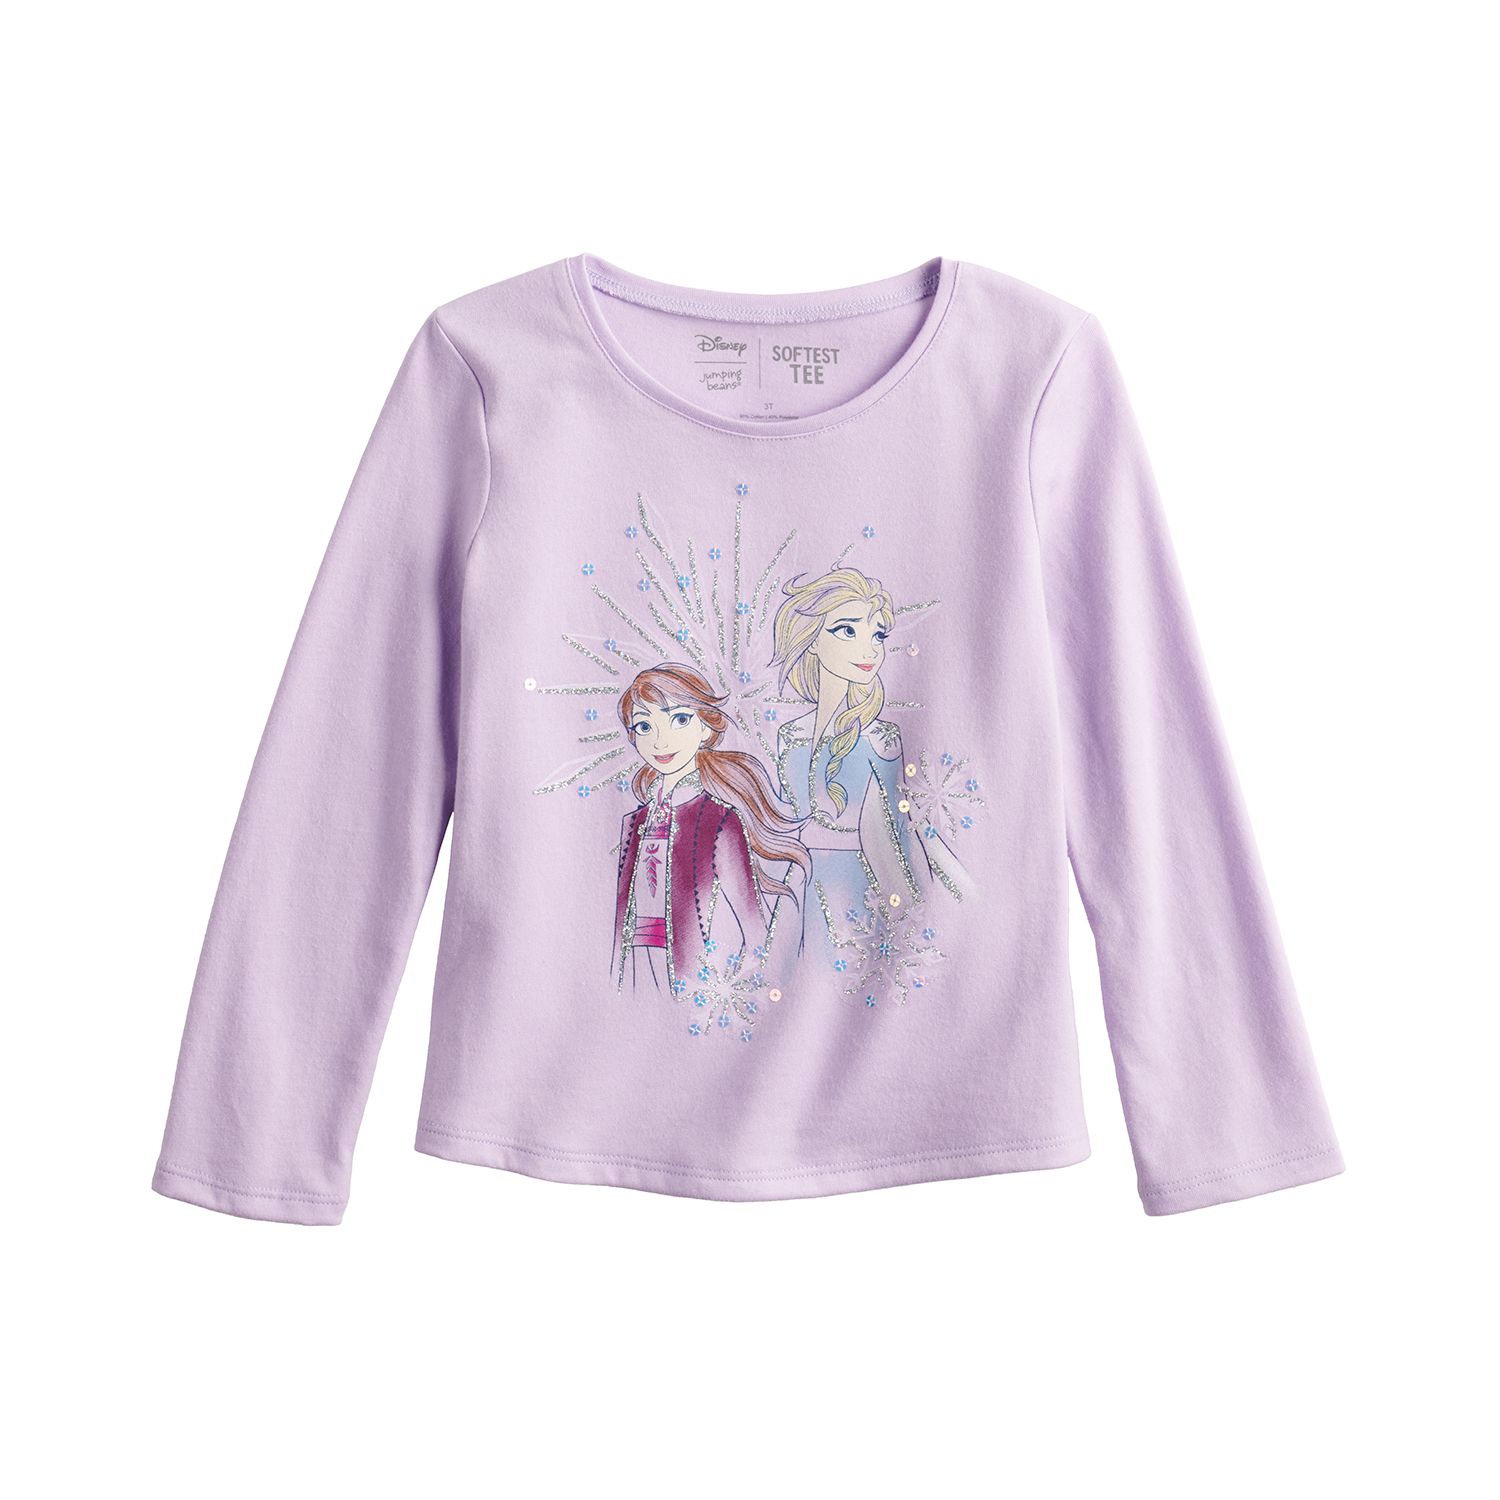 Image for Disney/Jumping Beans Disney's Frozen Anna & Elsa Toddler Girl Shirttail Hem Tee by Jumping Beans® at Kohl's.